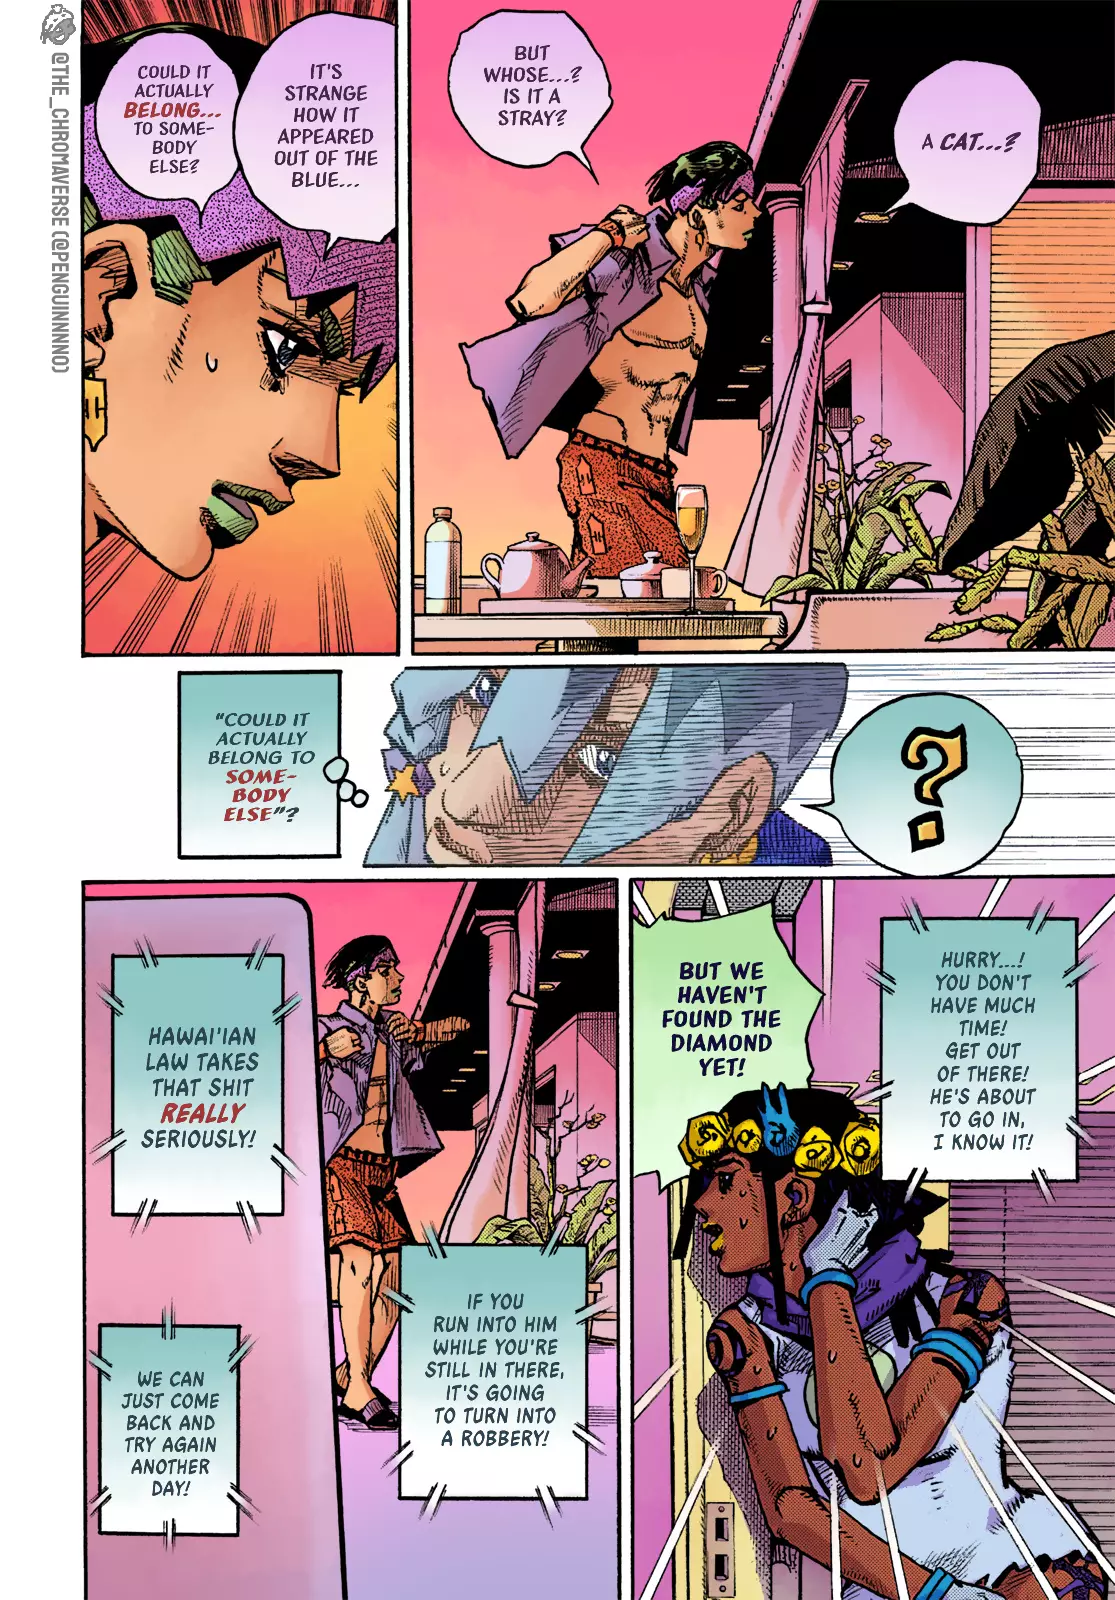 Jojo's Bizarre Adventure Part 9 - The Jojolands (Fan-Colored) - 3 page 17-e8255725